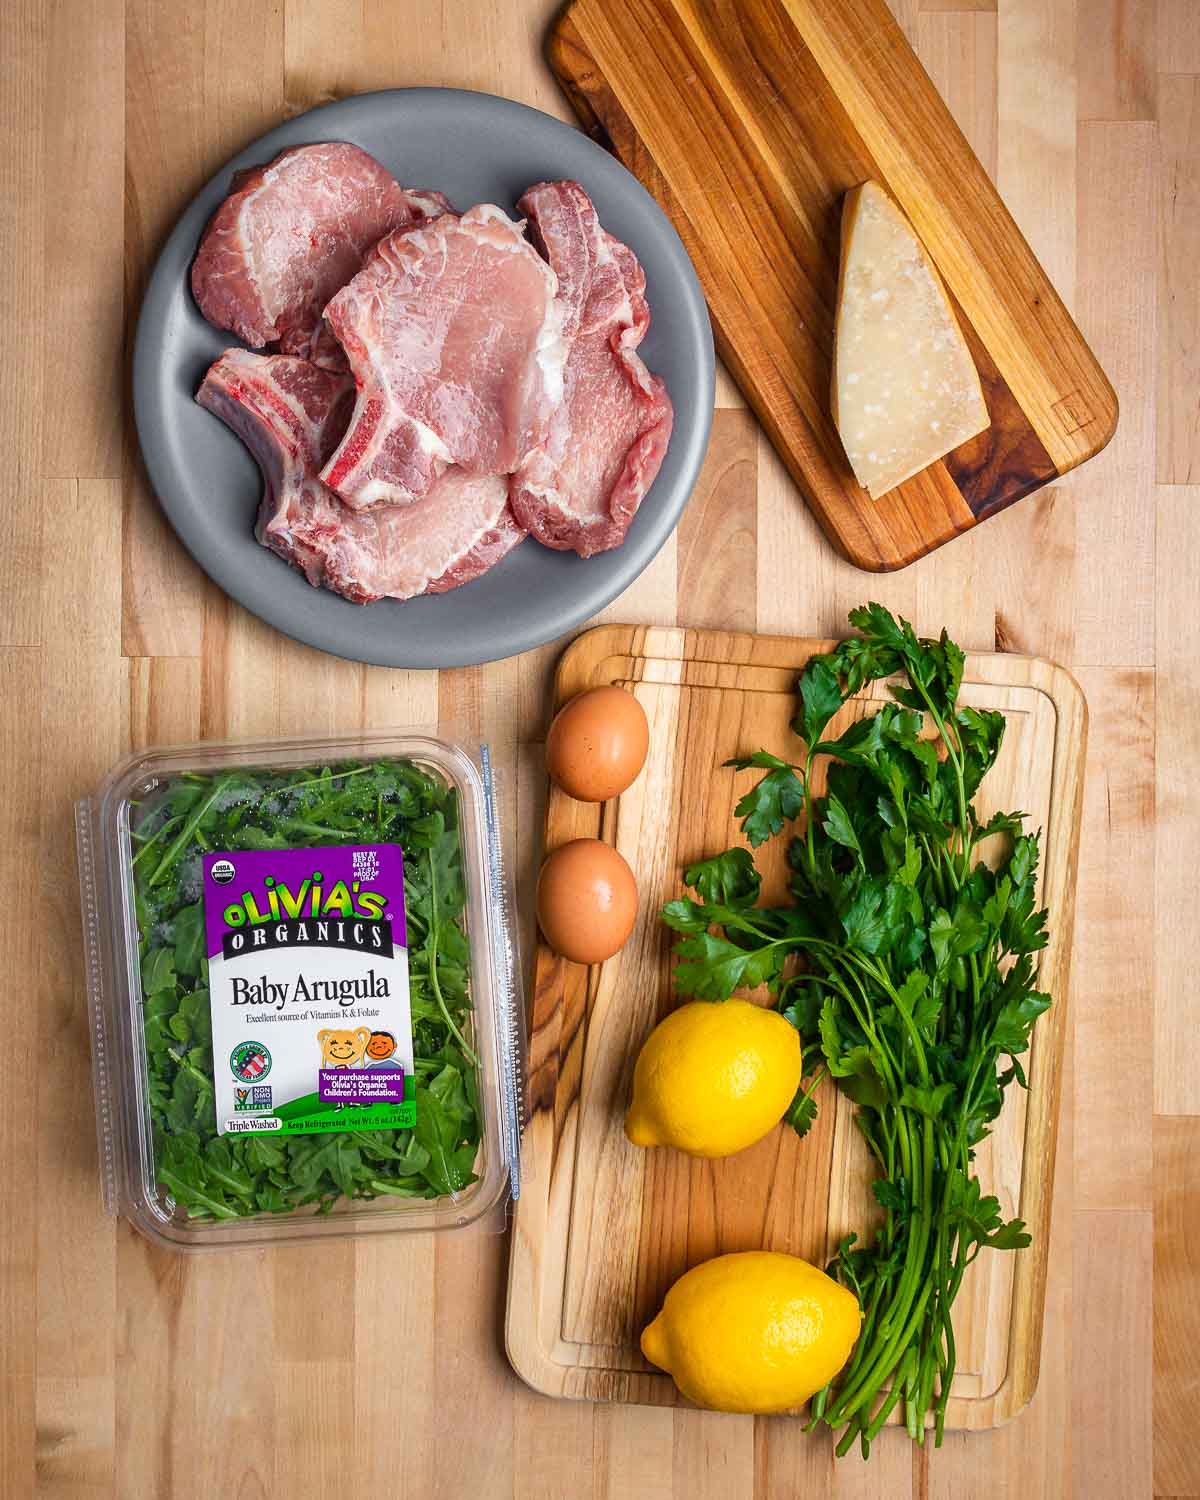 Ingredients shown: pork chops, Parmigiano Reggiano, baby arugula, eggs, lemons, and parsley.